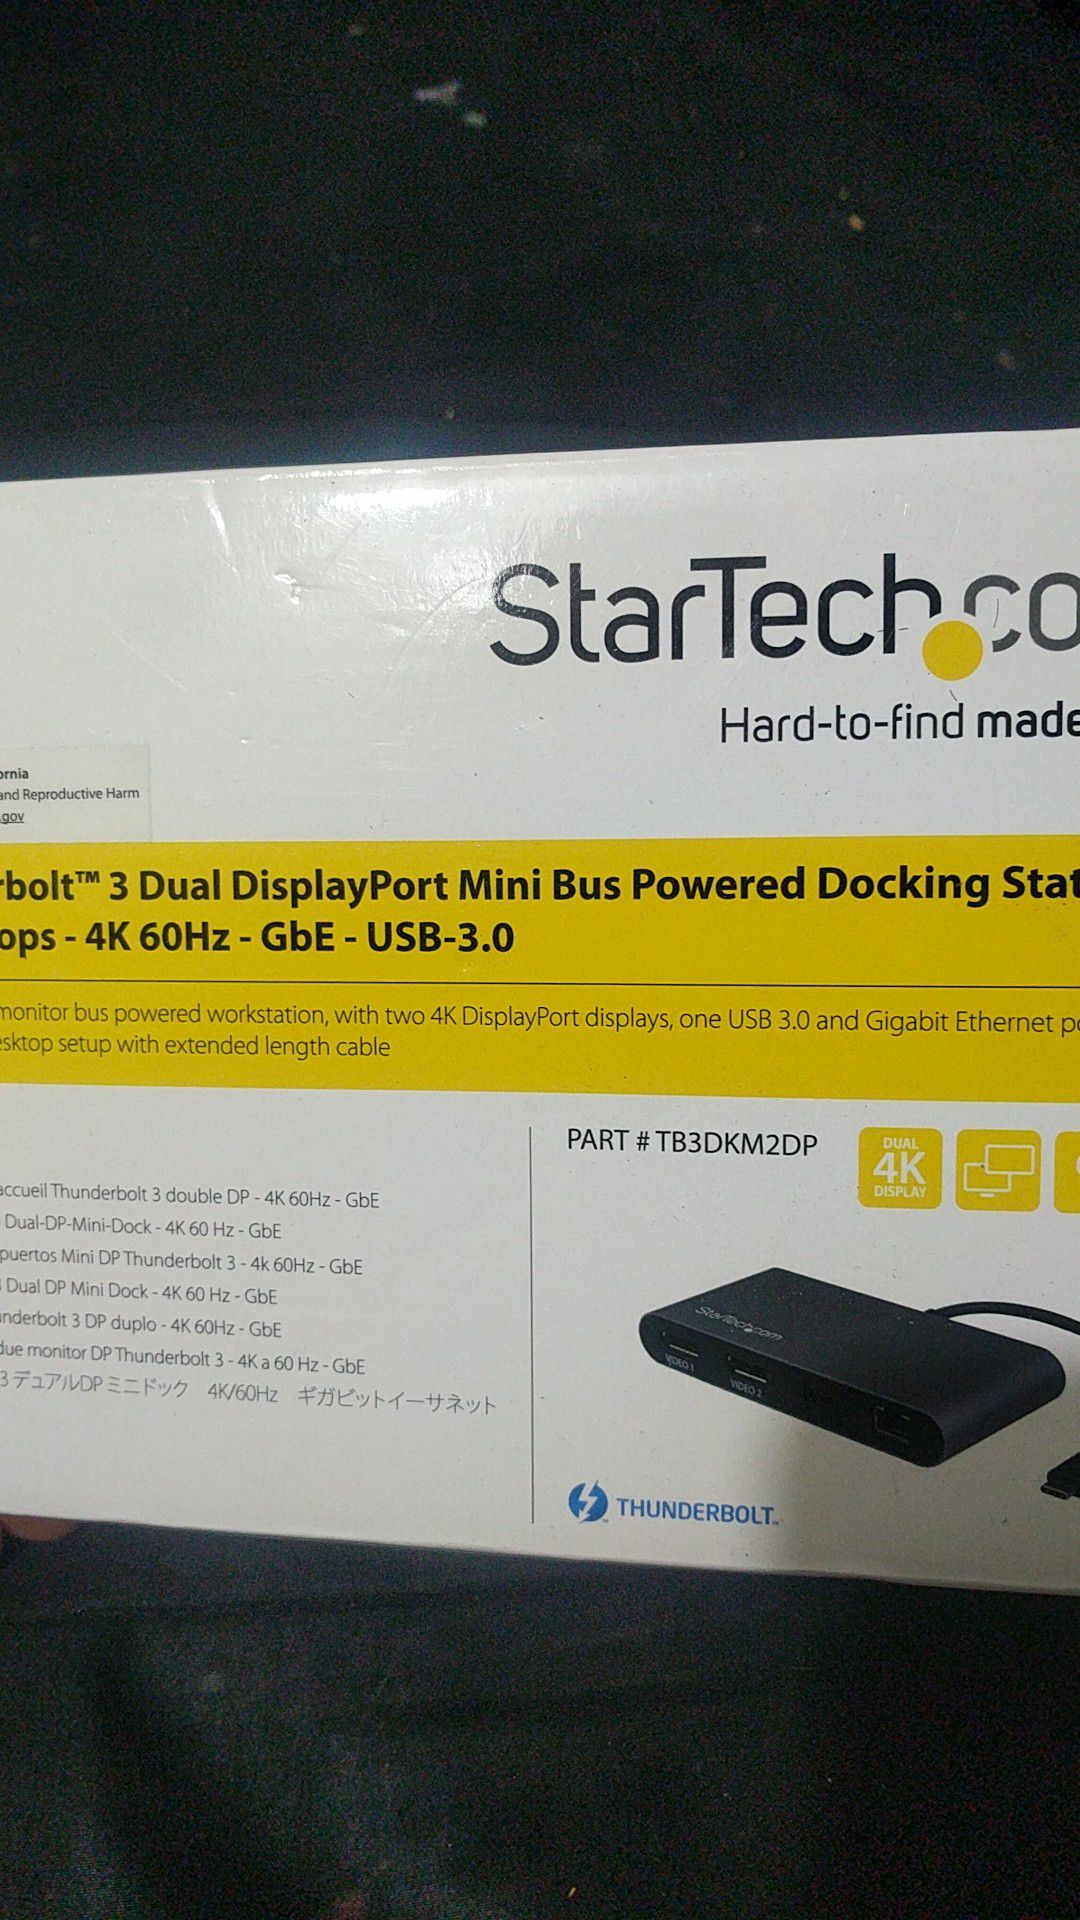 Startechdotcom thunderbolt 3 dual display mini bus docking station for laptops in 4k